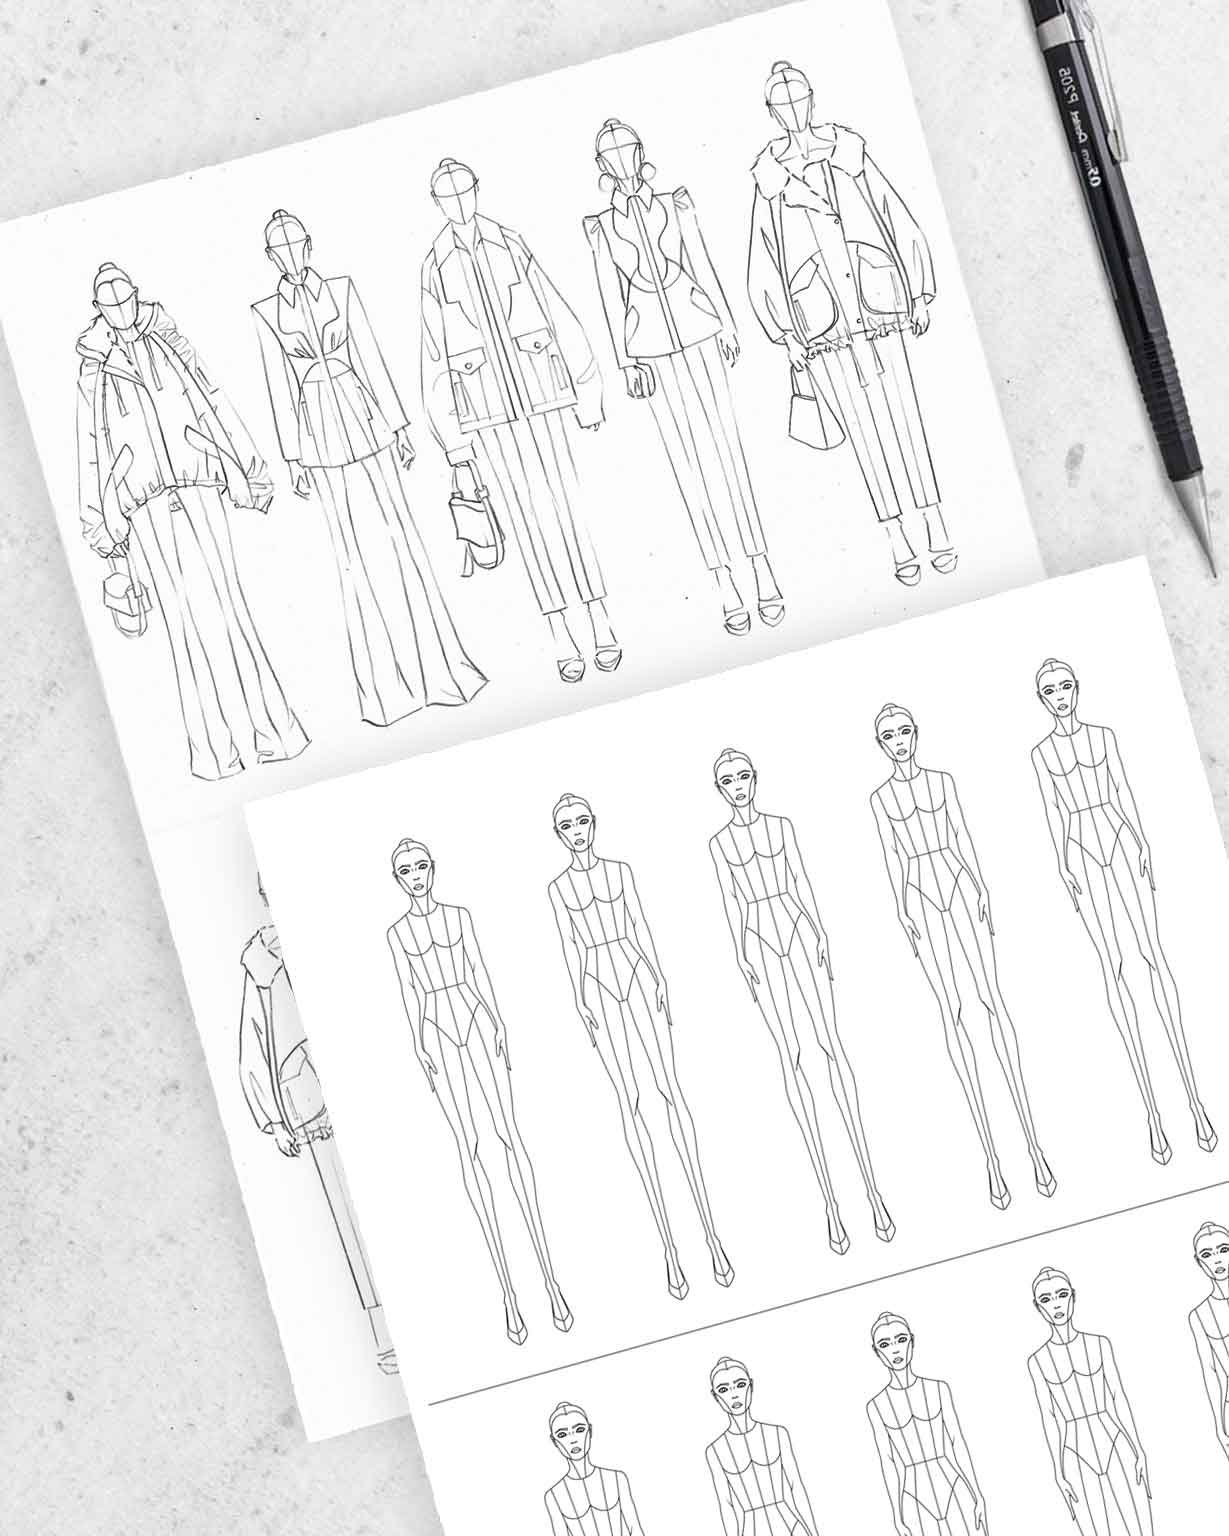 Thumbnail fashion design brainstorm examples